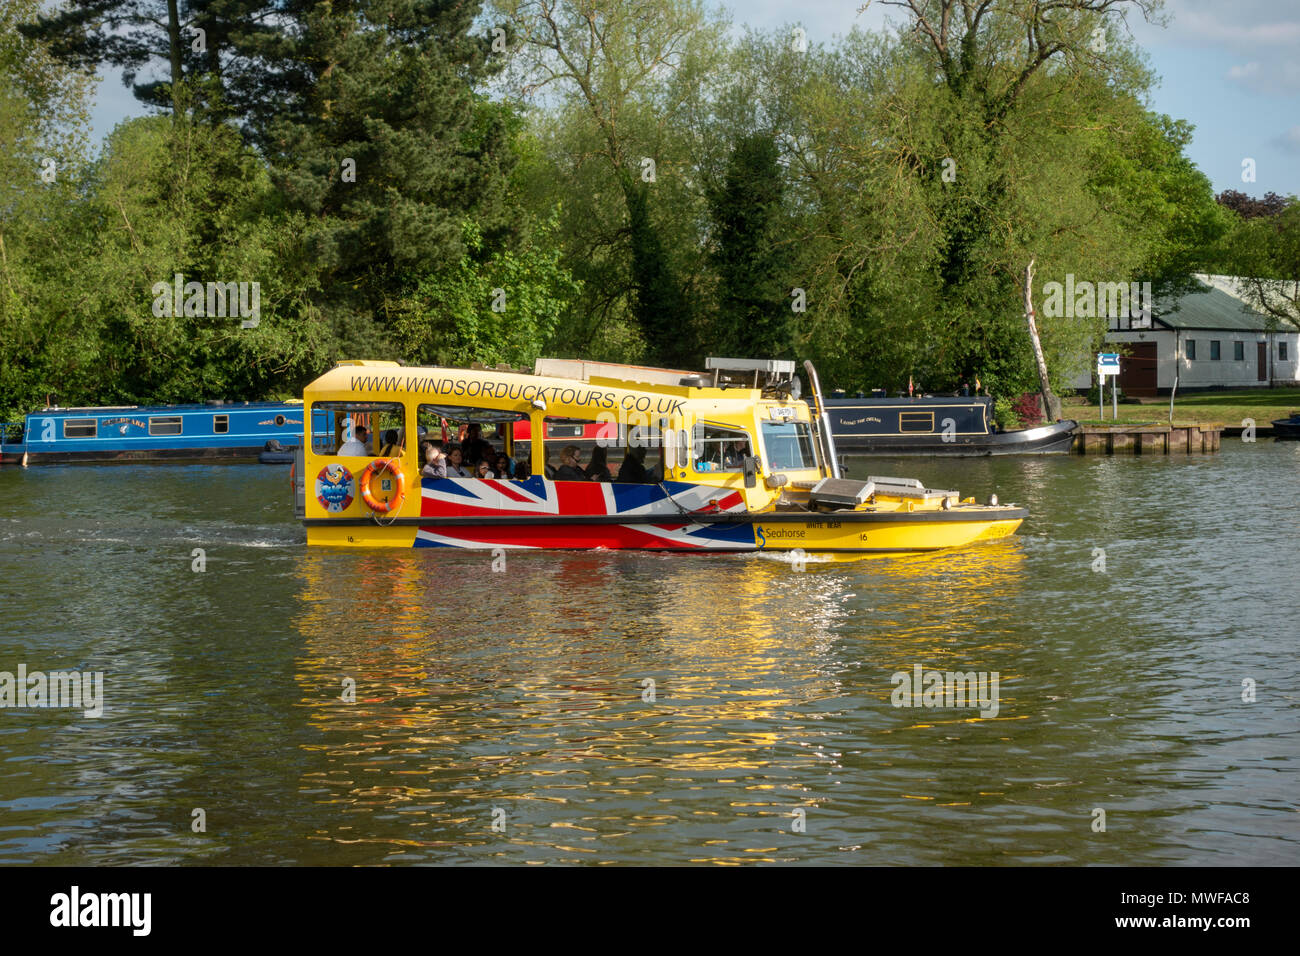 The Windsor Duck Tours 'White Bear' DUKW tour boat cruising on the  River Thames, UK. Stock Photo